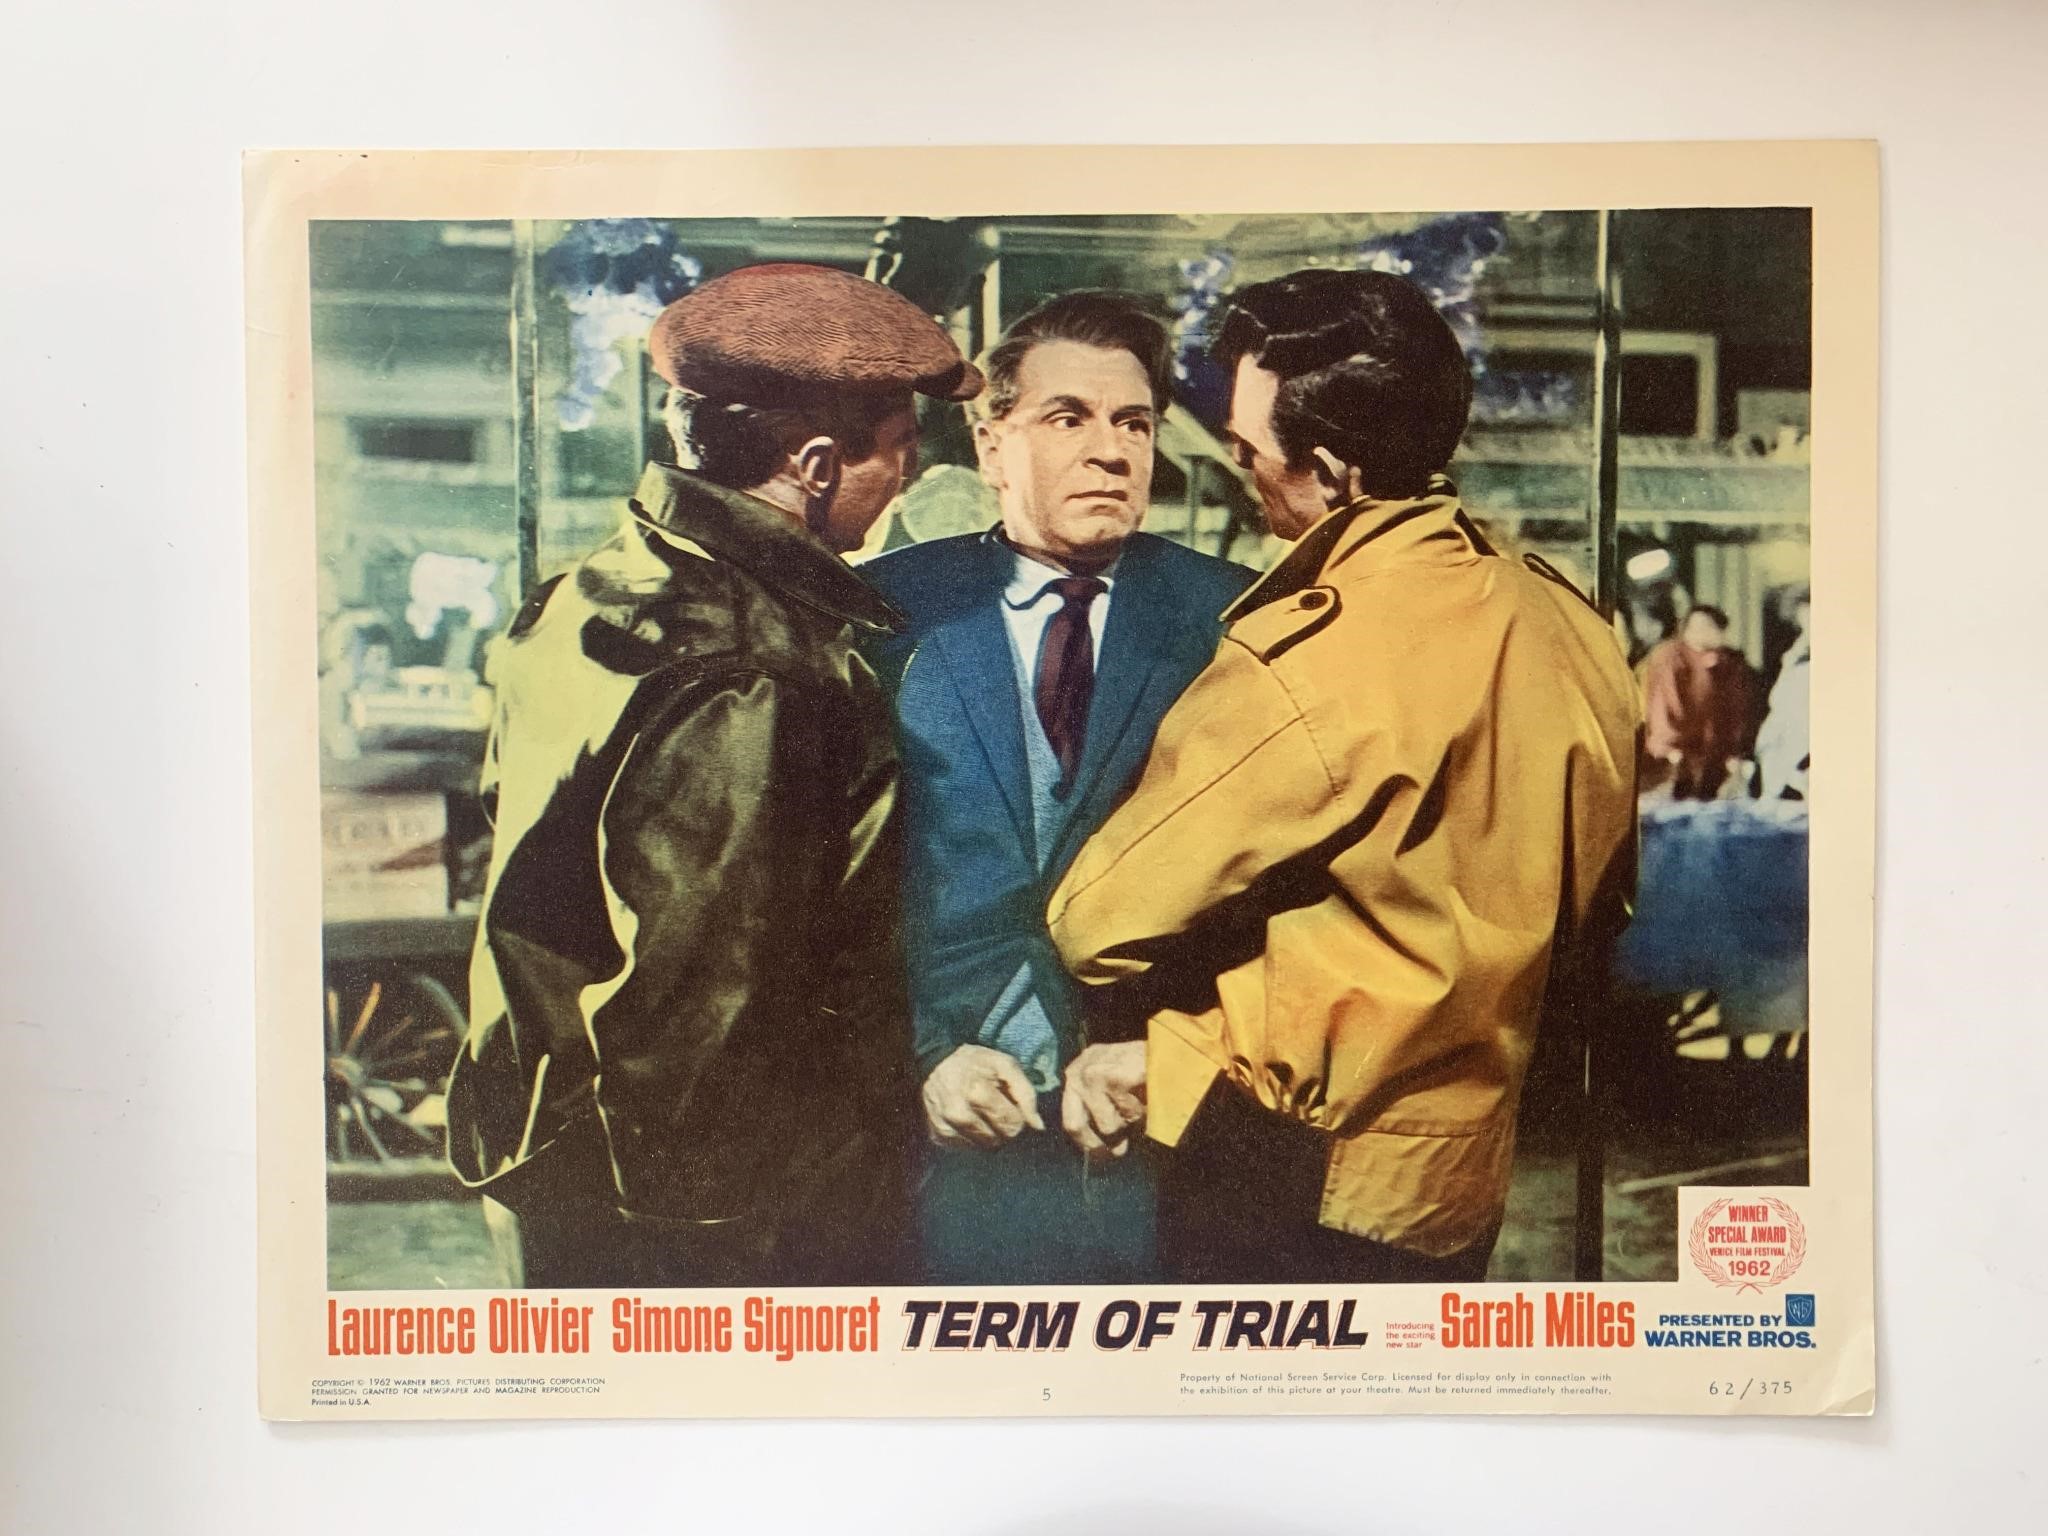 Term of Trial 1962 vintage lobby card